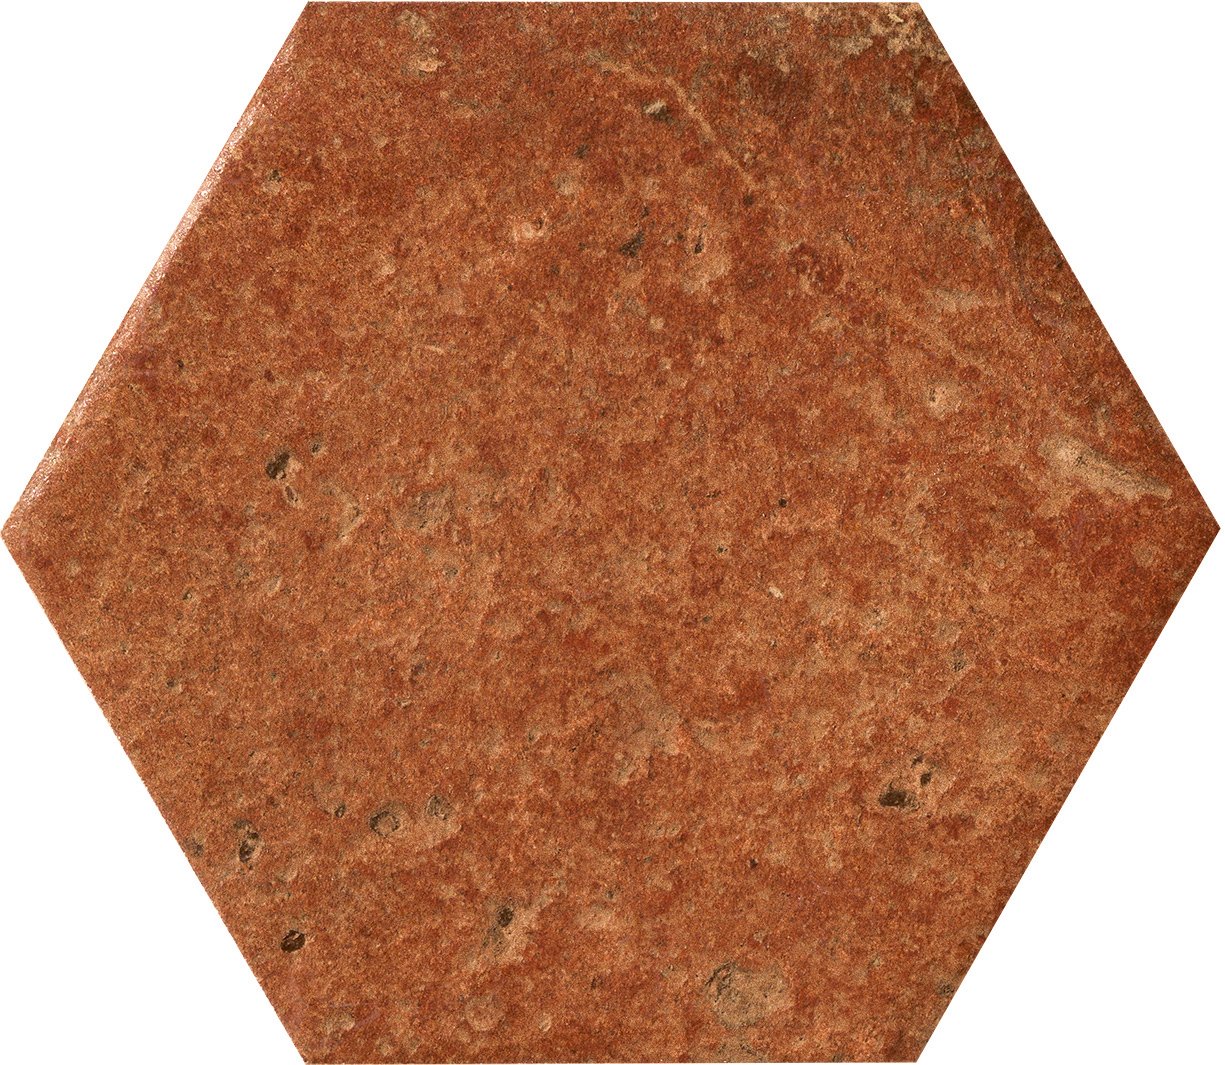 Fliese Hexagon Terracotta "Cotto del Campiano Rosso" 15,8x18,3cm CIR (Farbmischung nach Zufall)